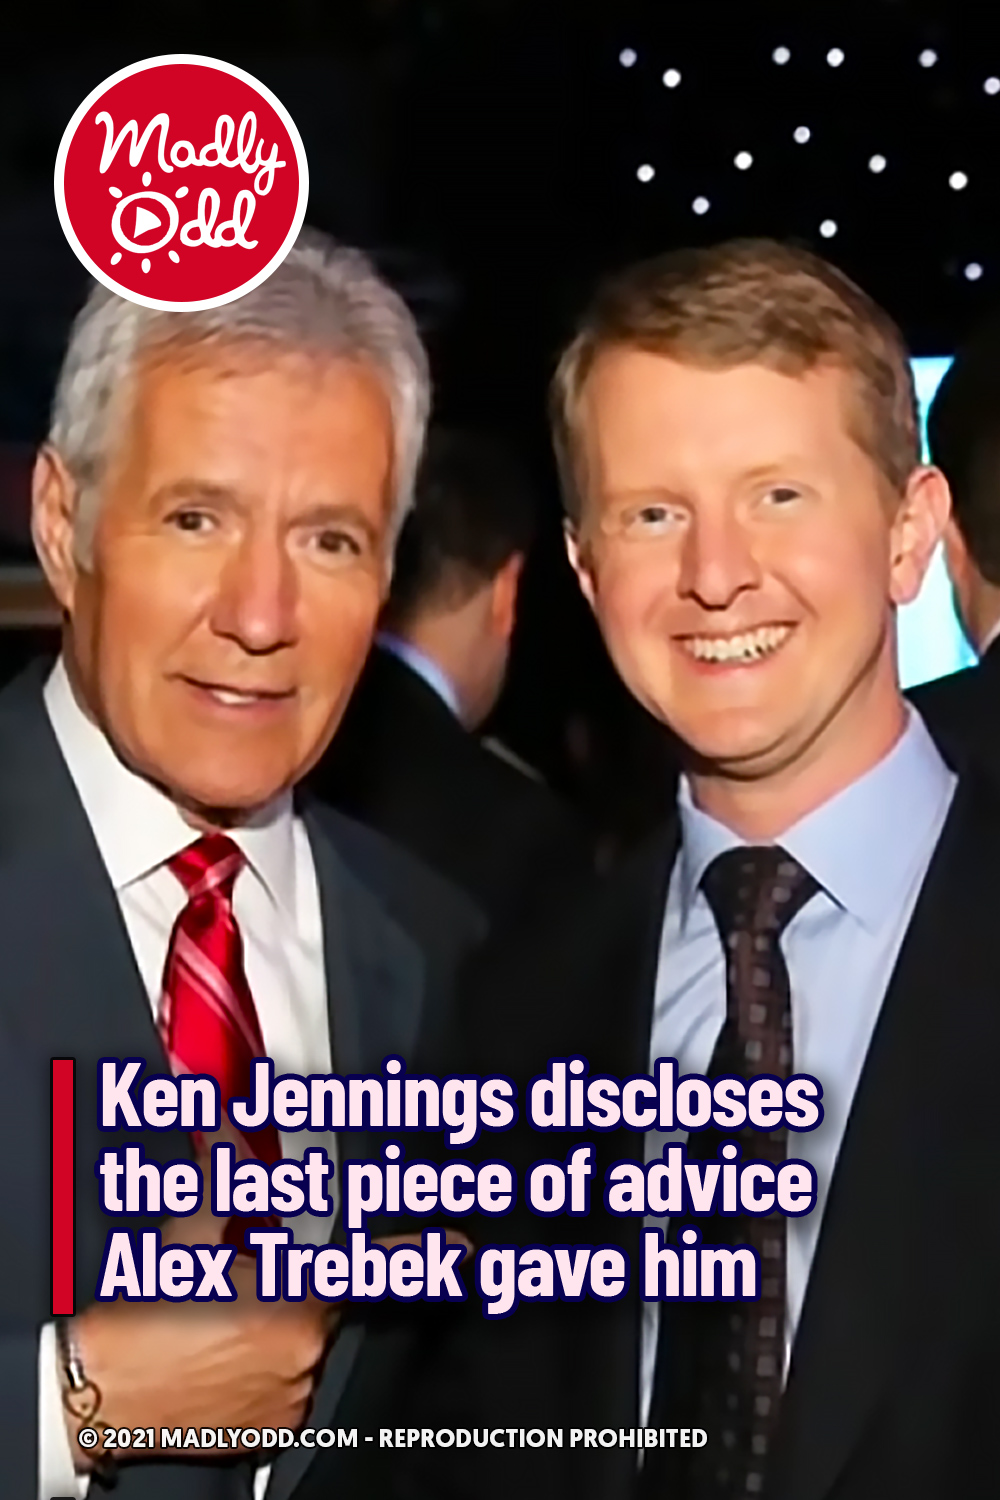 Ken Jennings discloses the last piece of advice Alex Trebek gave him